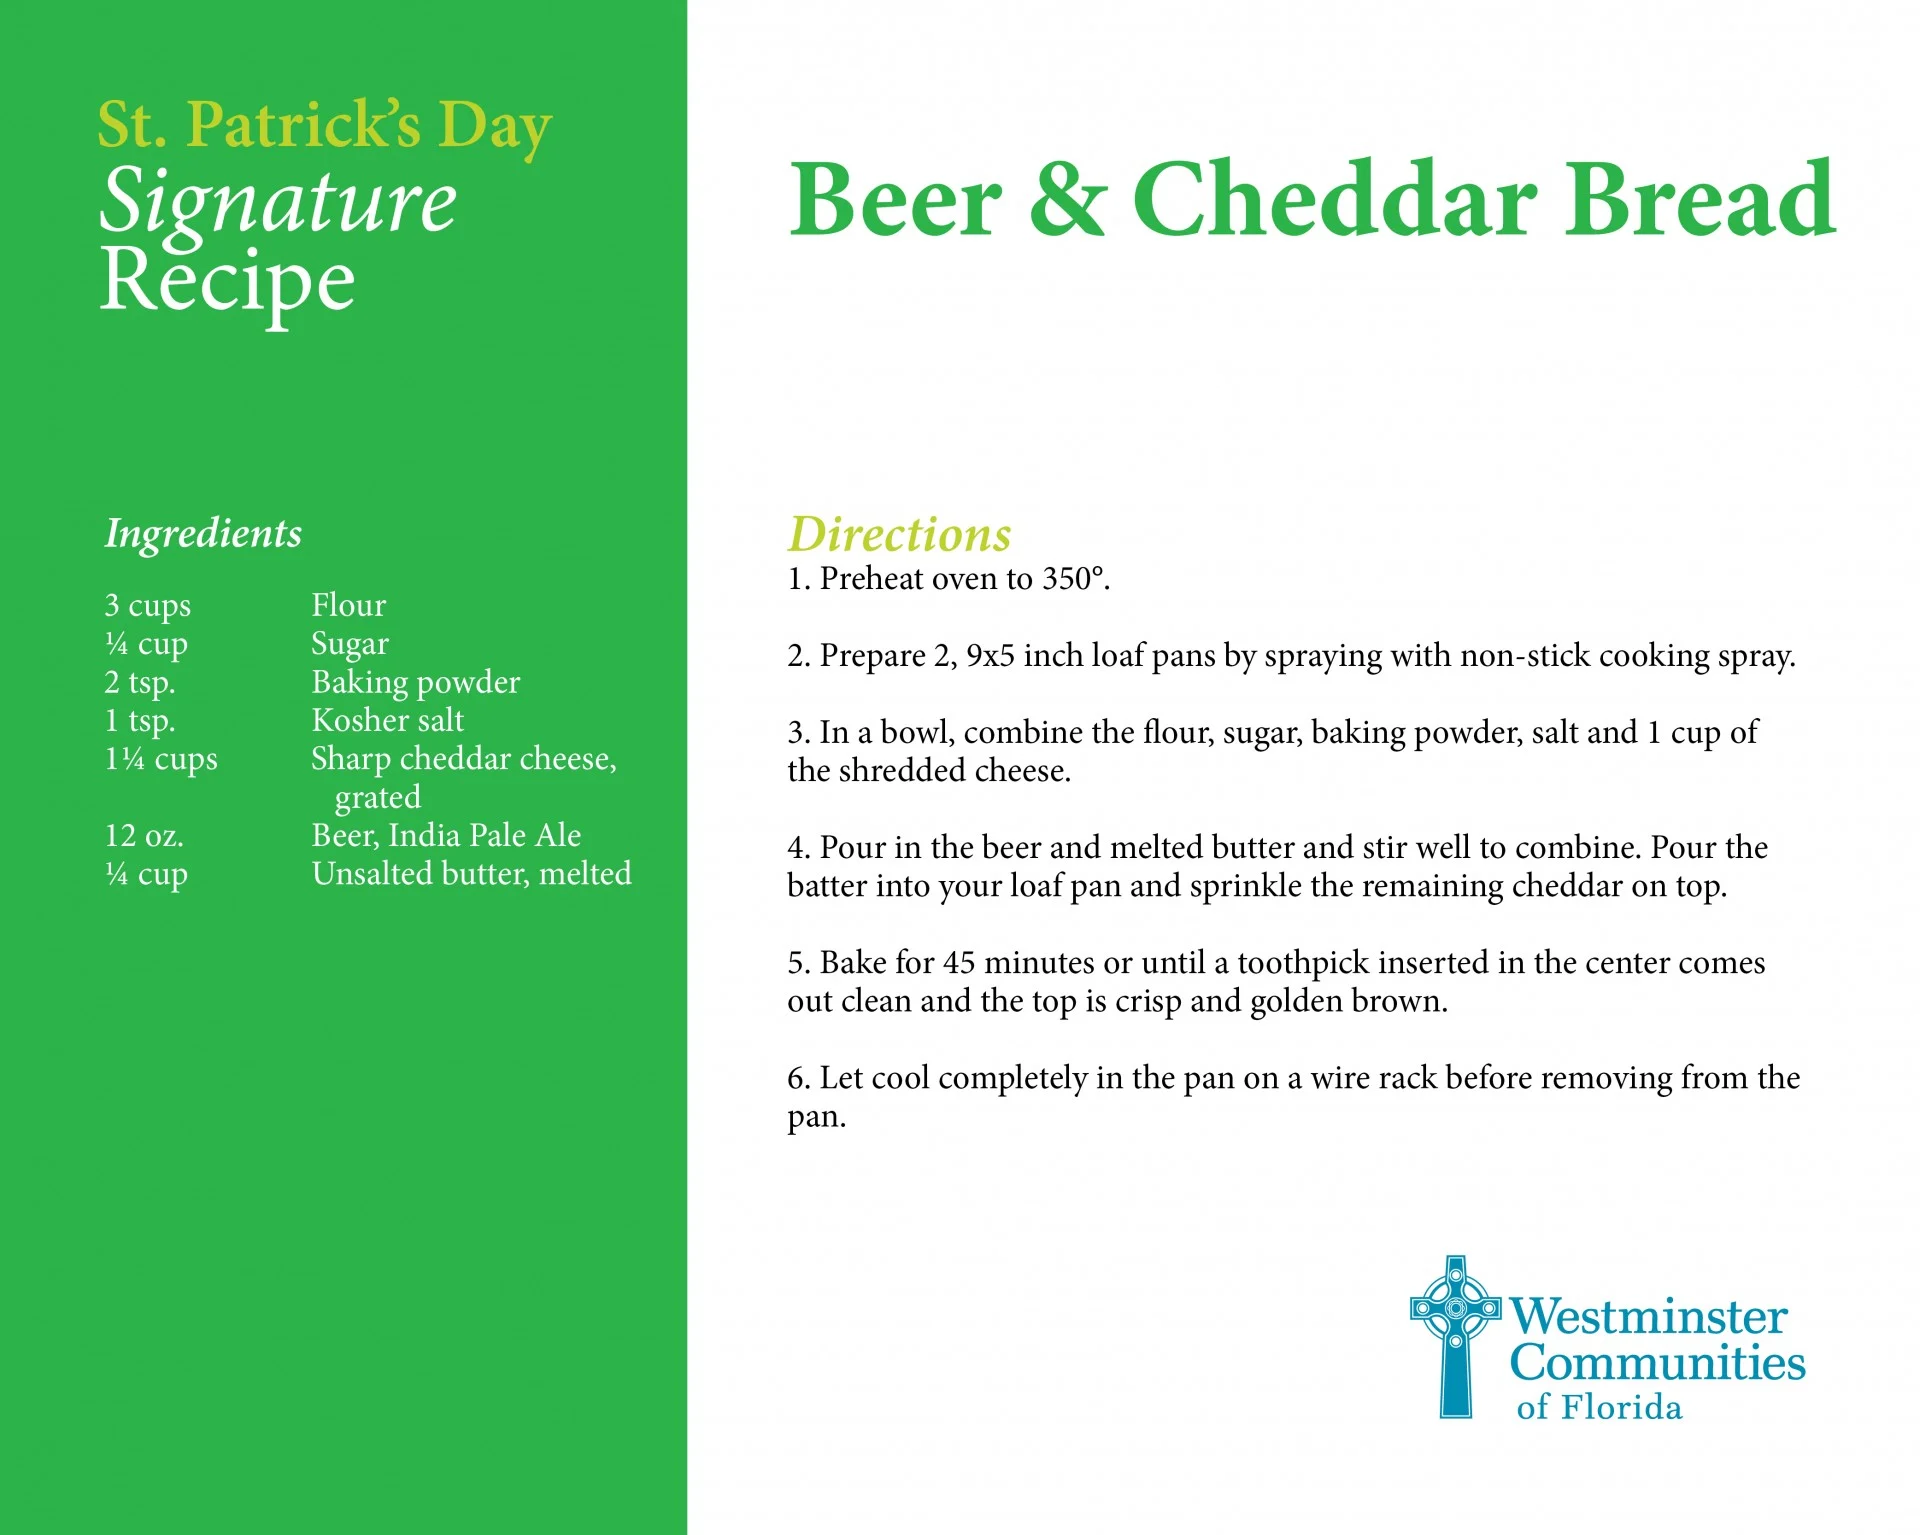 St. Patrick's Day Recipe